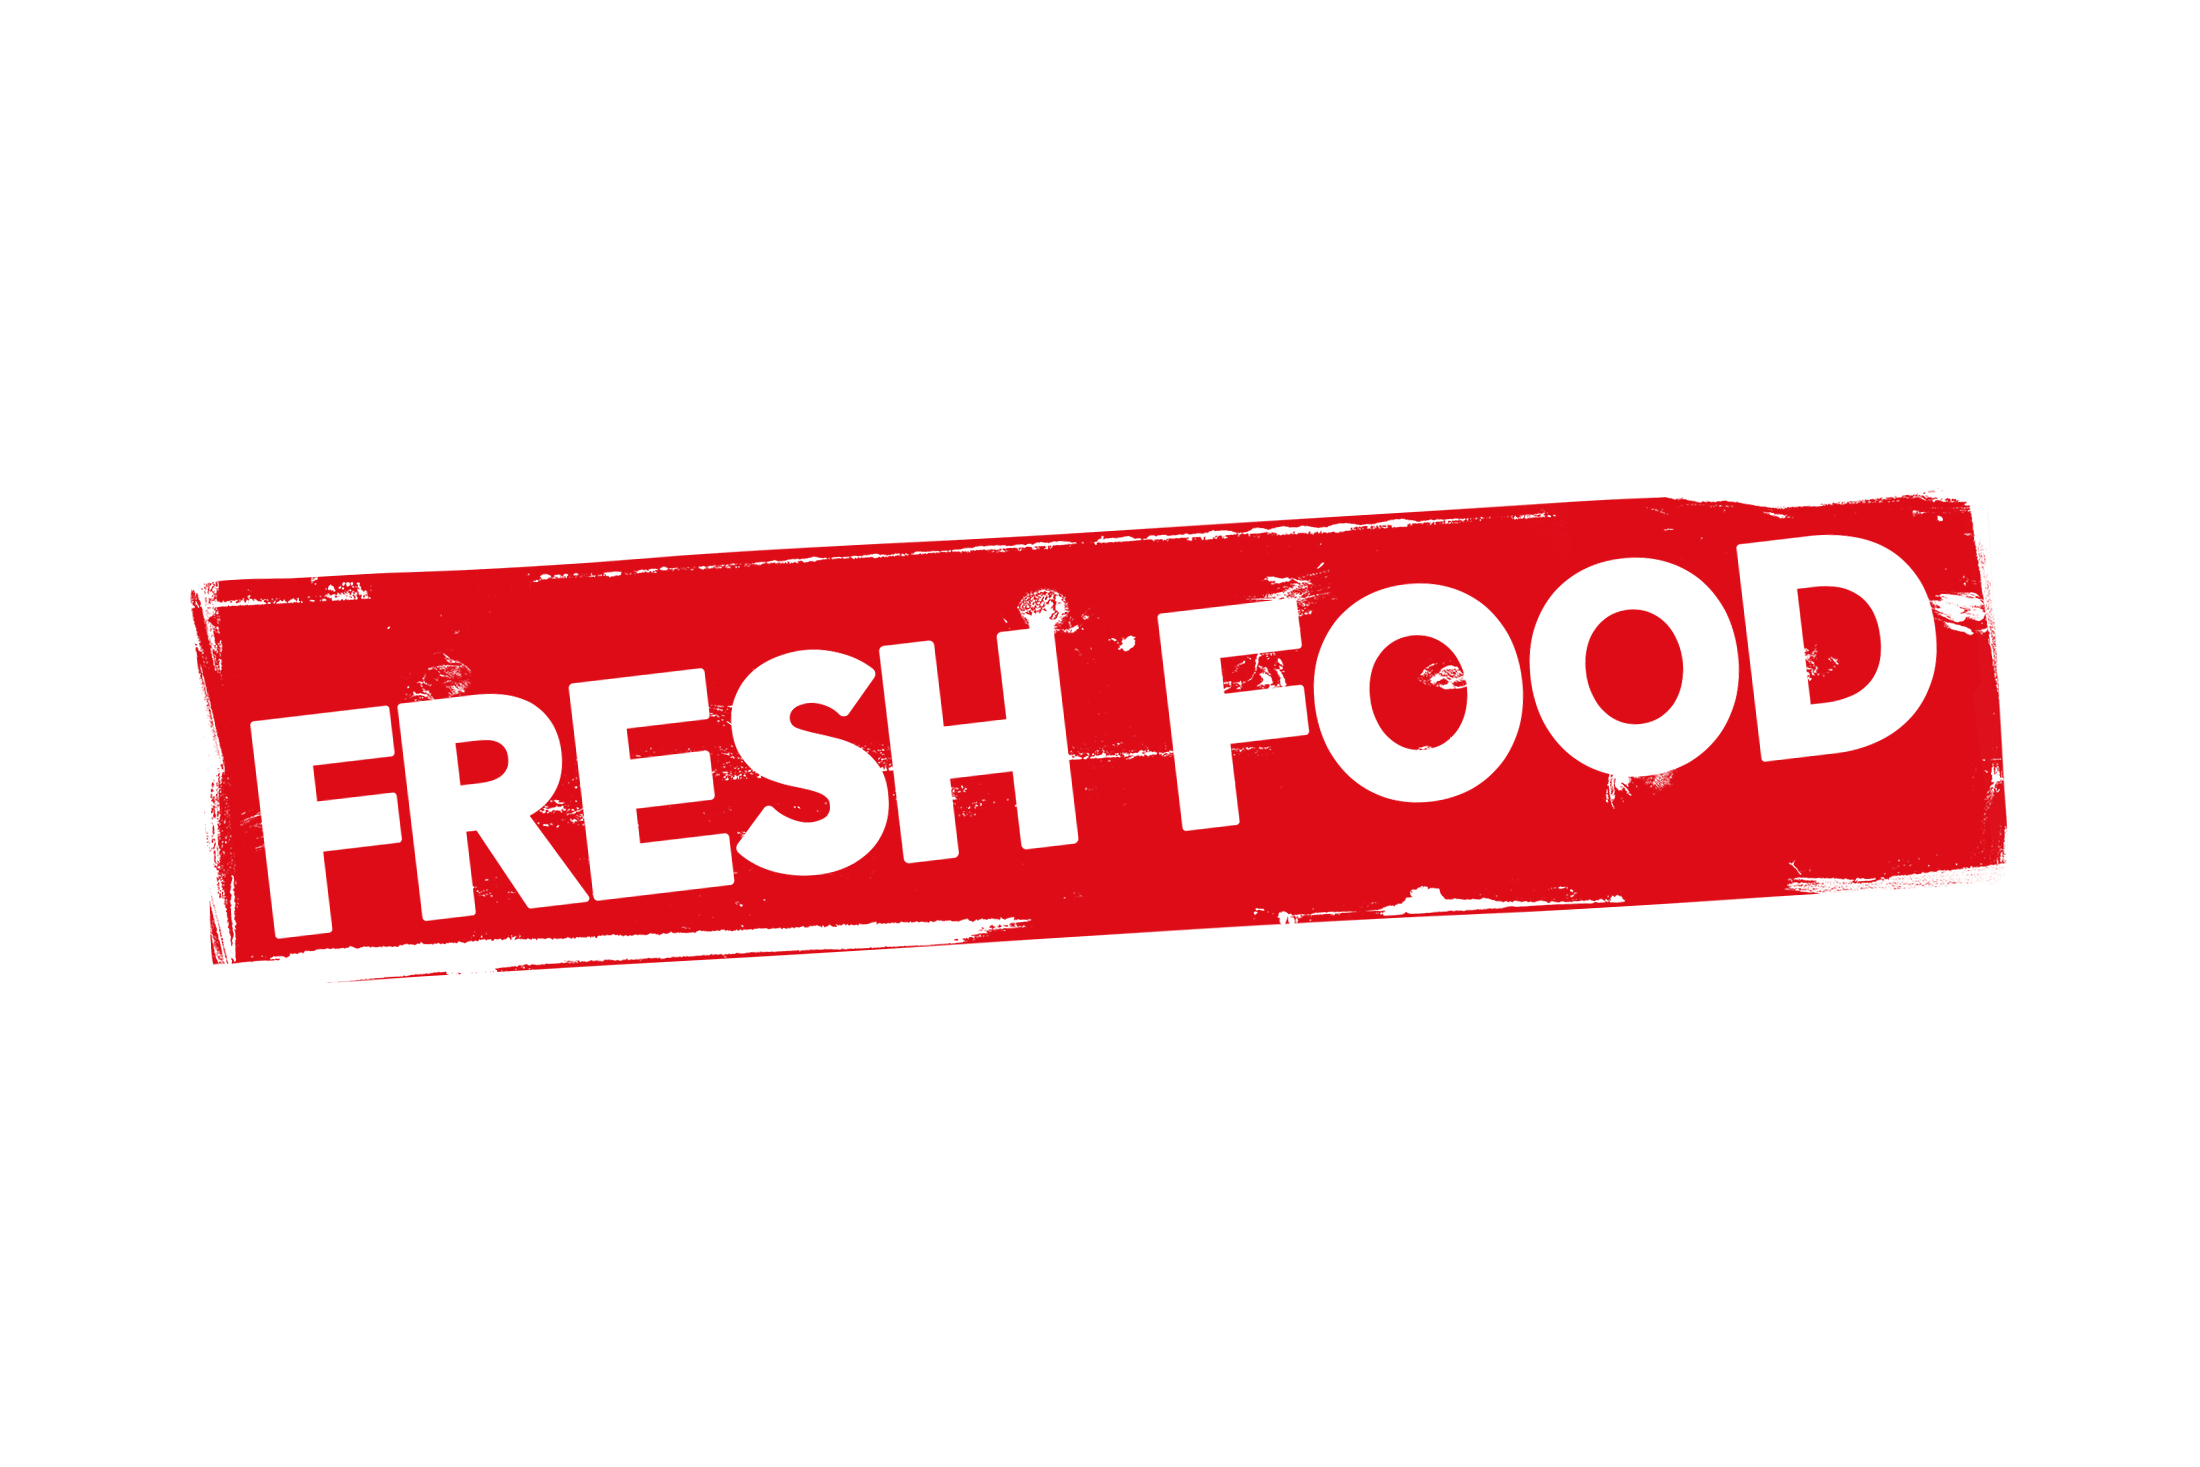 Grunge fresh food label PSD